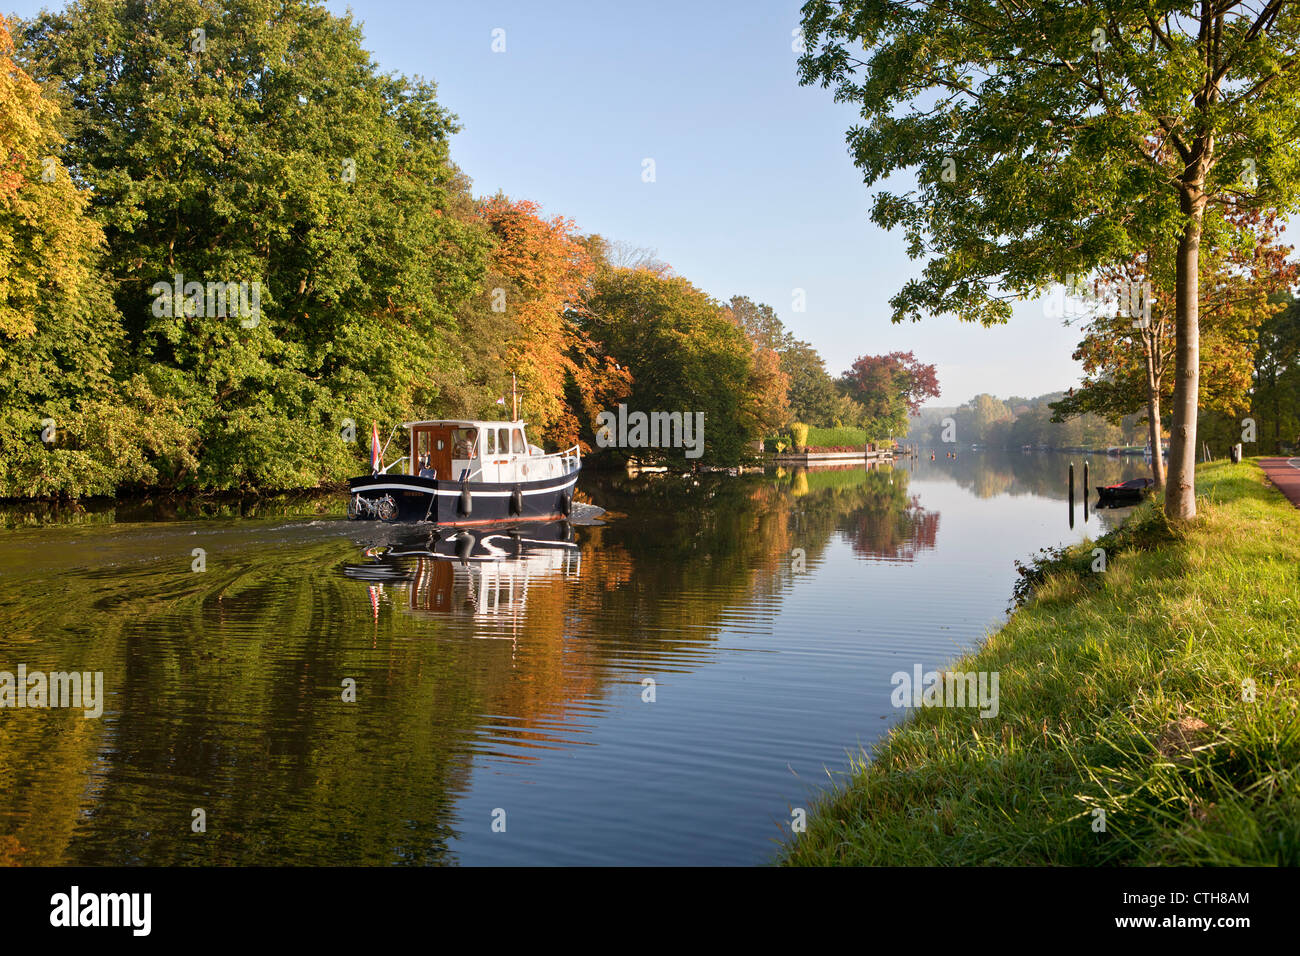 The Netherlands, Breukelen, Pleasure boat on the river Vecht. Stock Photo